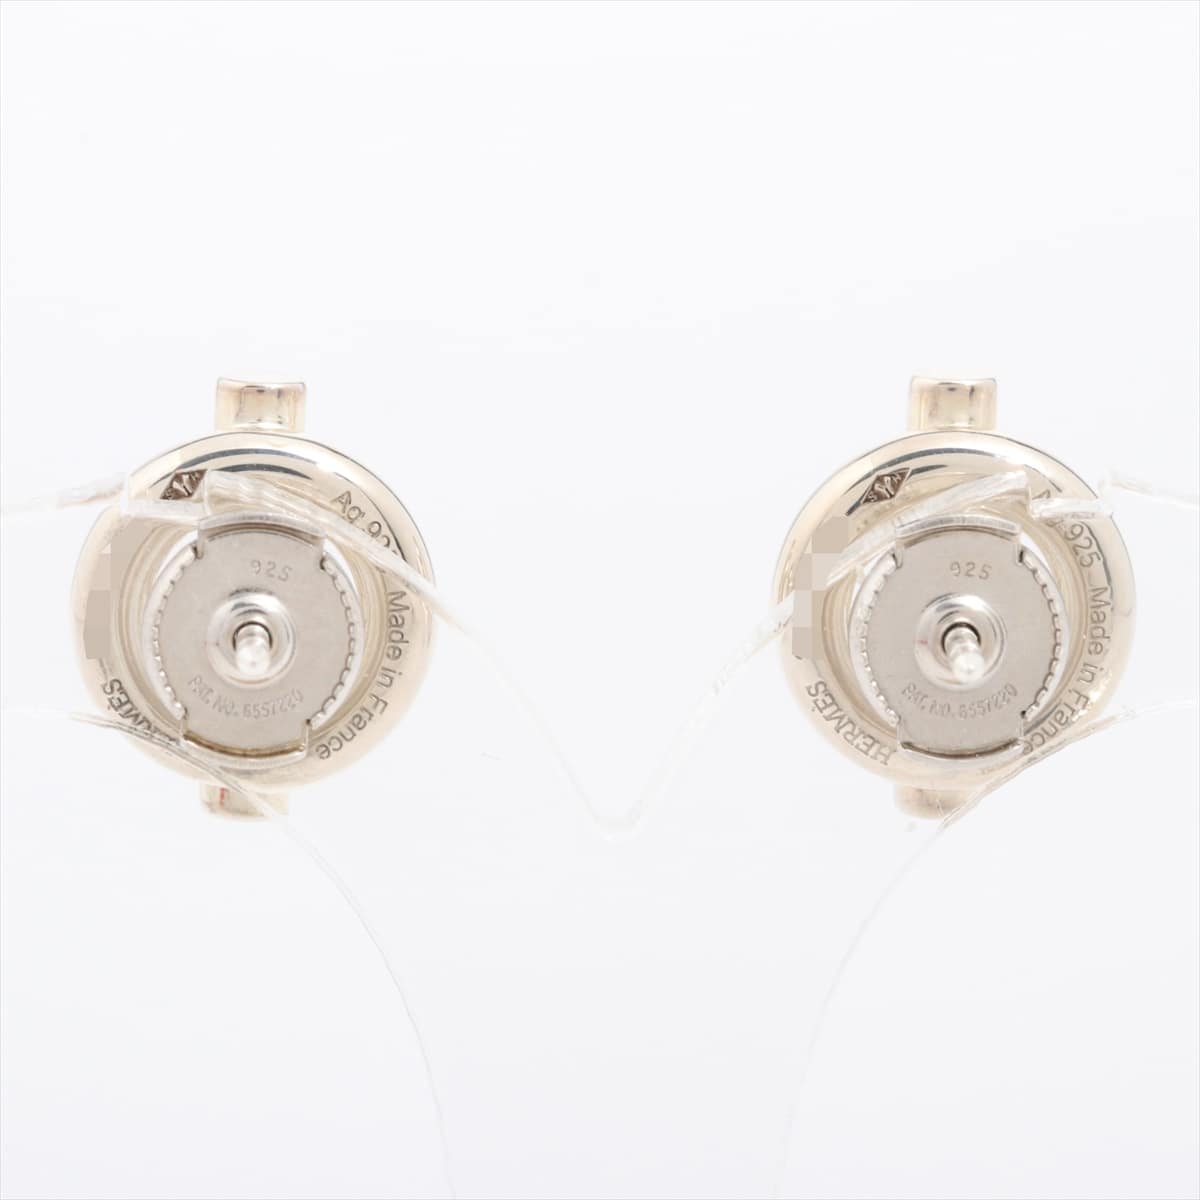 Hermès Chaîne d'Ancre Piercing jewelry (for both ears) 925 6.1g Silver